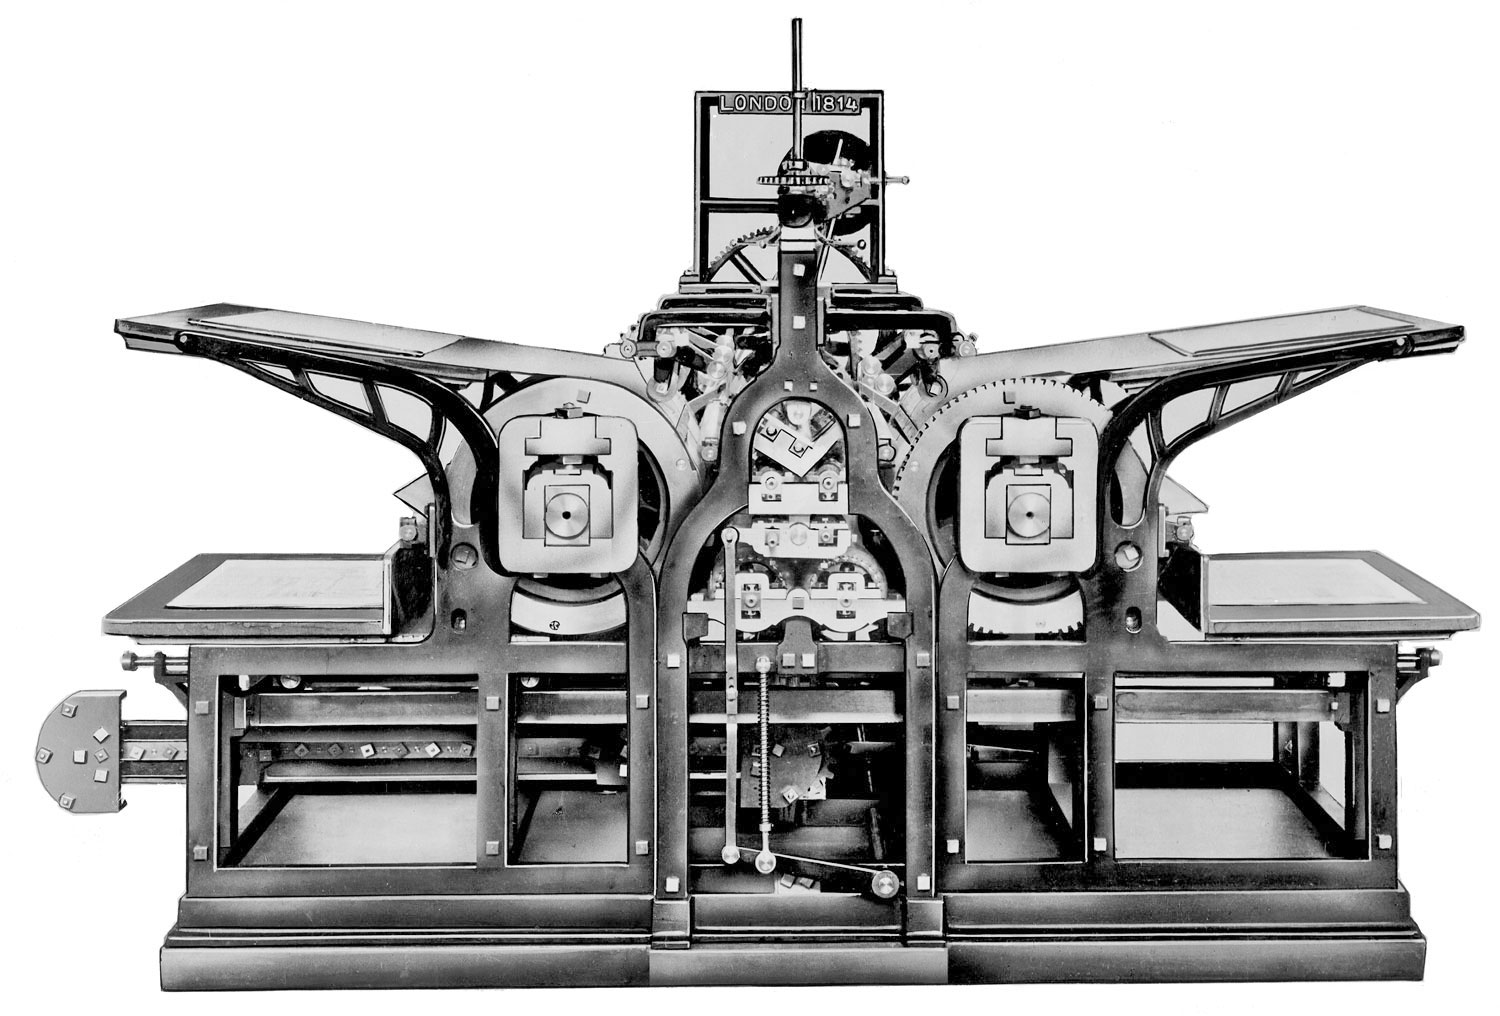 Koenig and steam powered printing press Age of Revolution